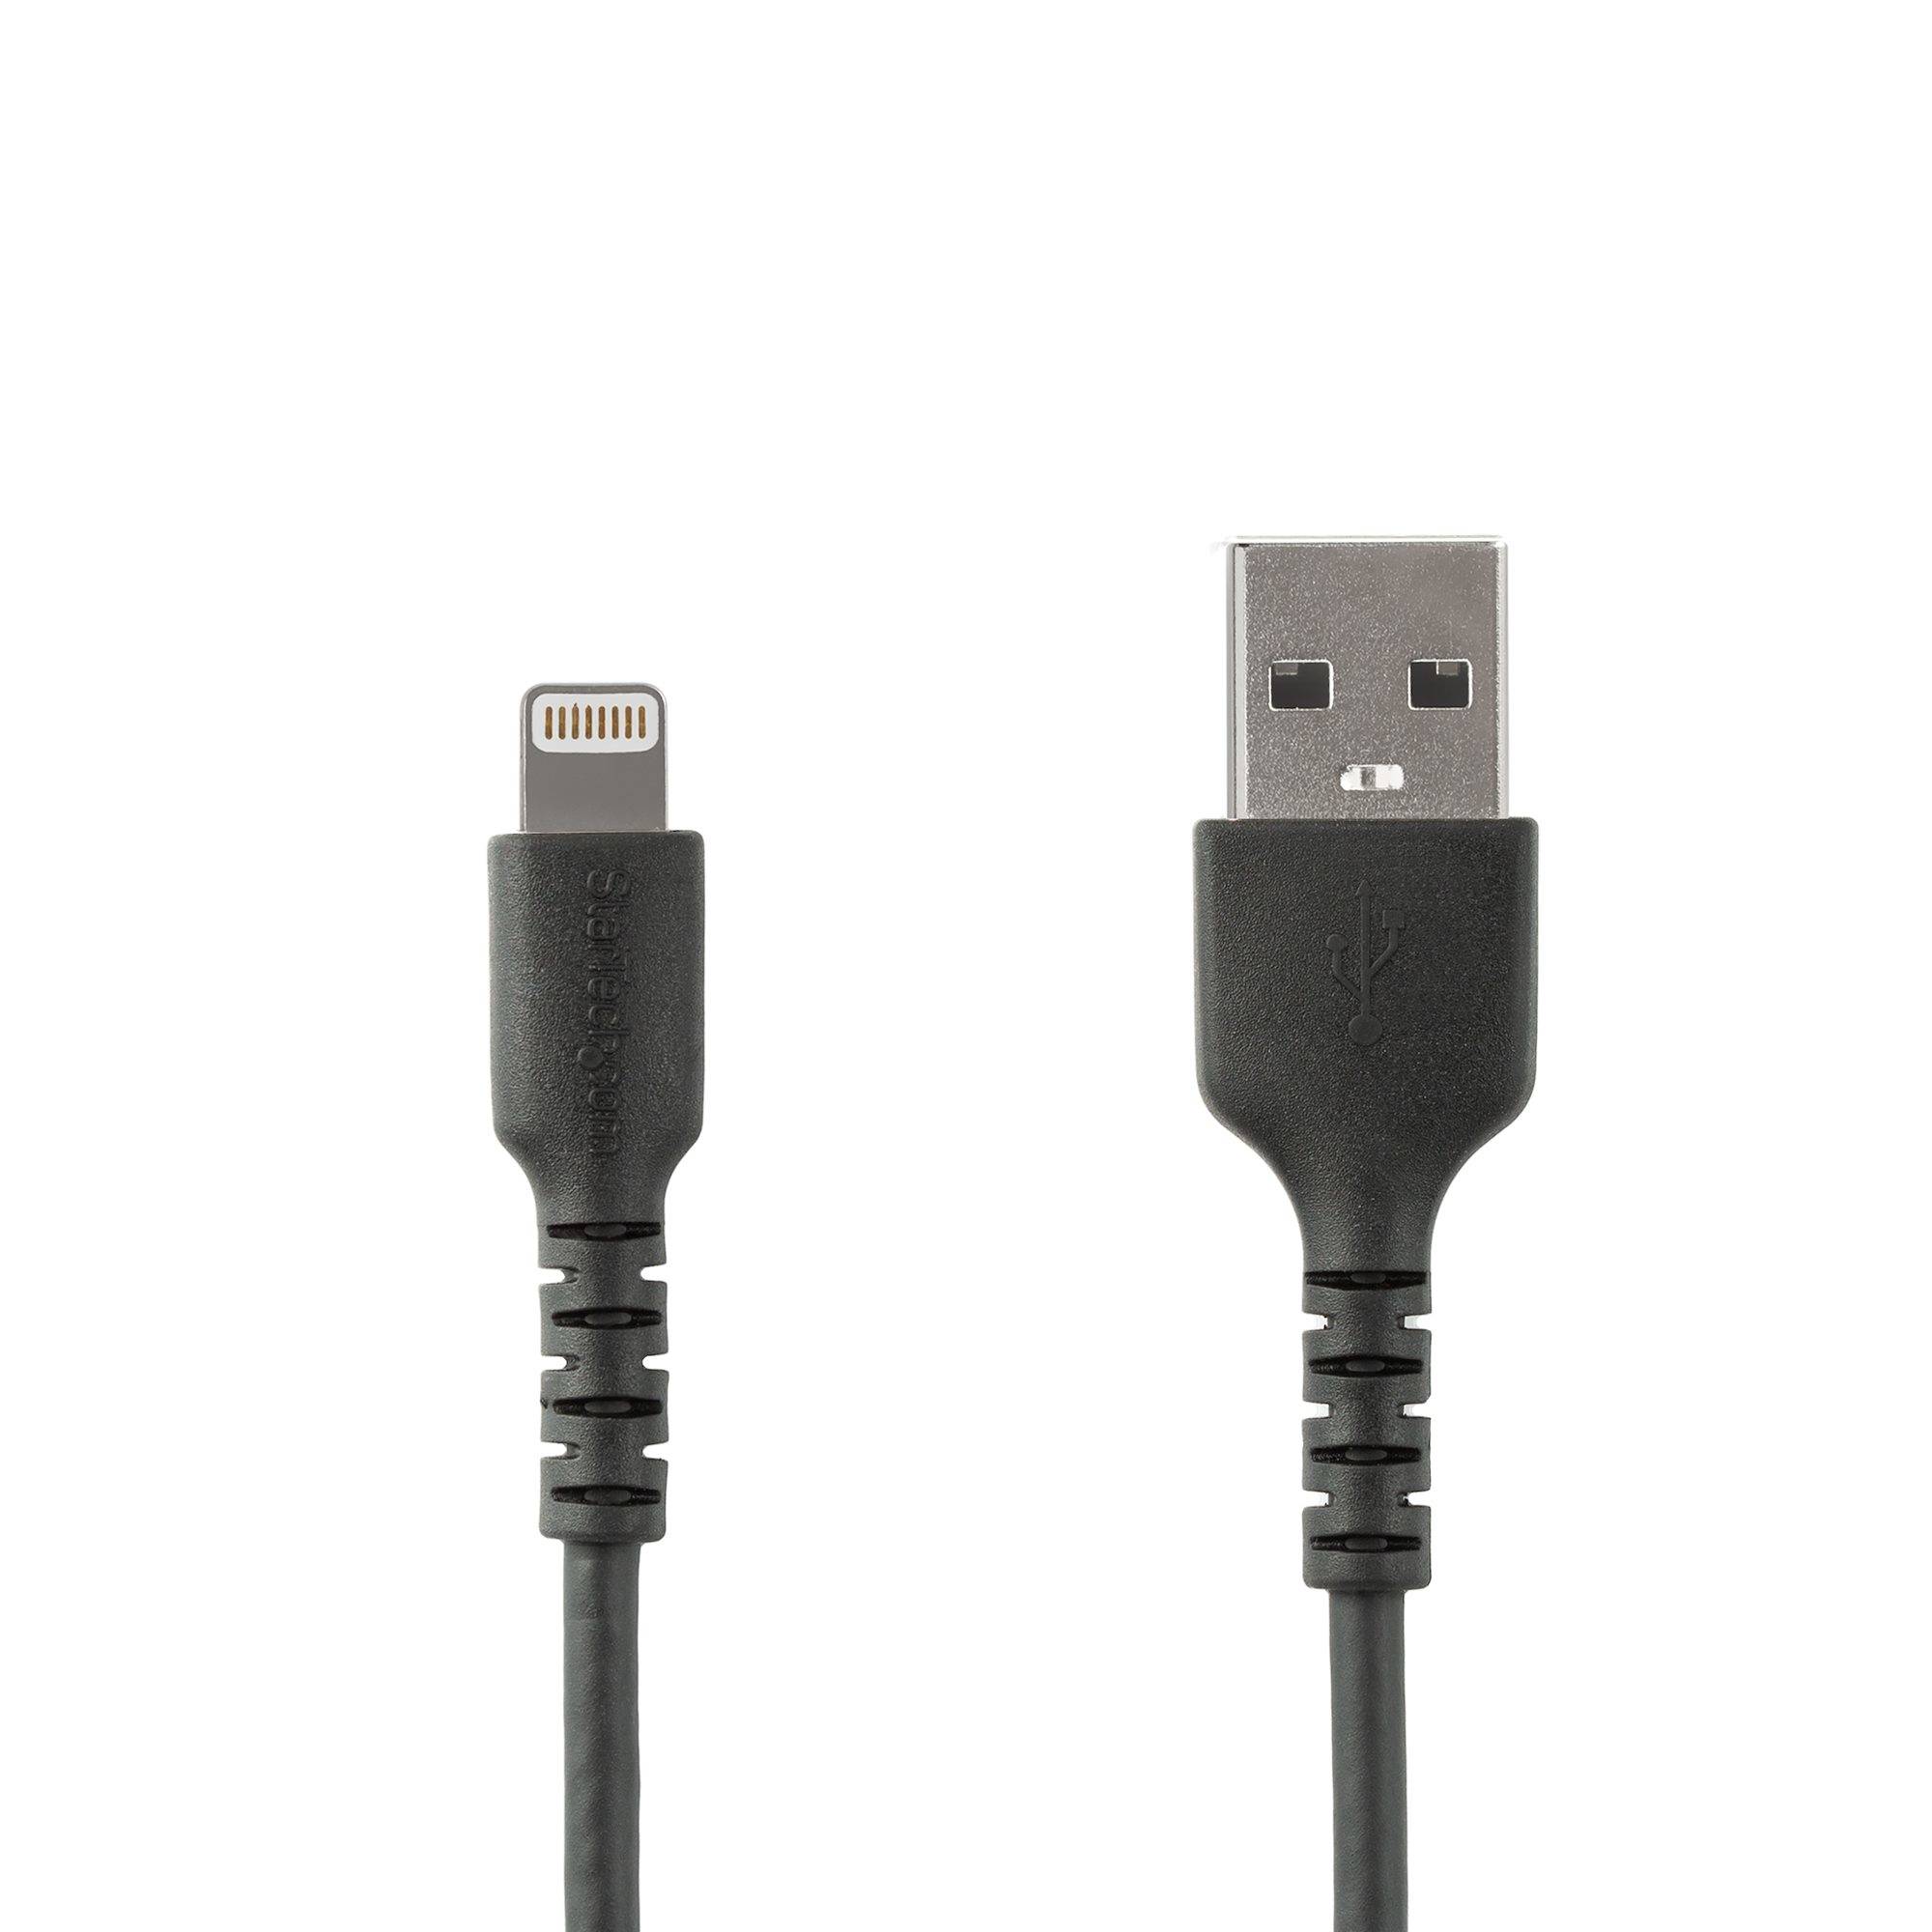 Rca Informatique - Image du produit : 1M USB TO LIGHTNING CABLE APPLE MFI CERTIFIED - BLACK